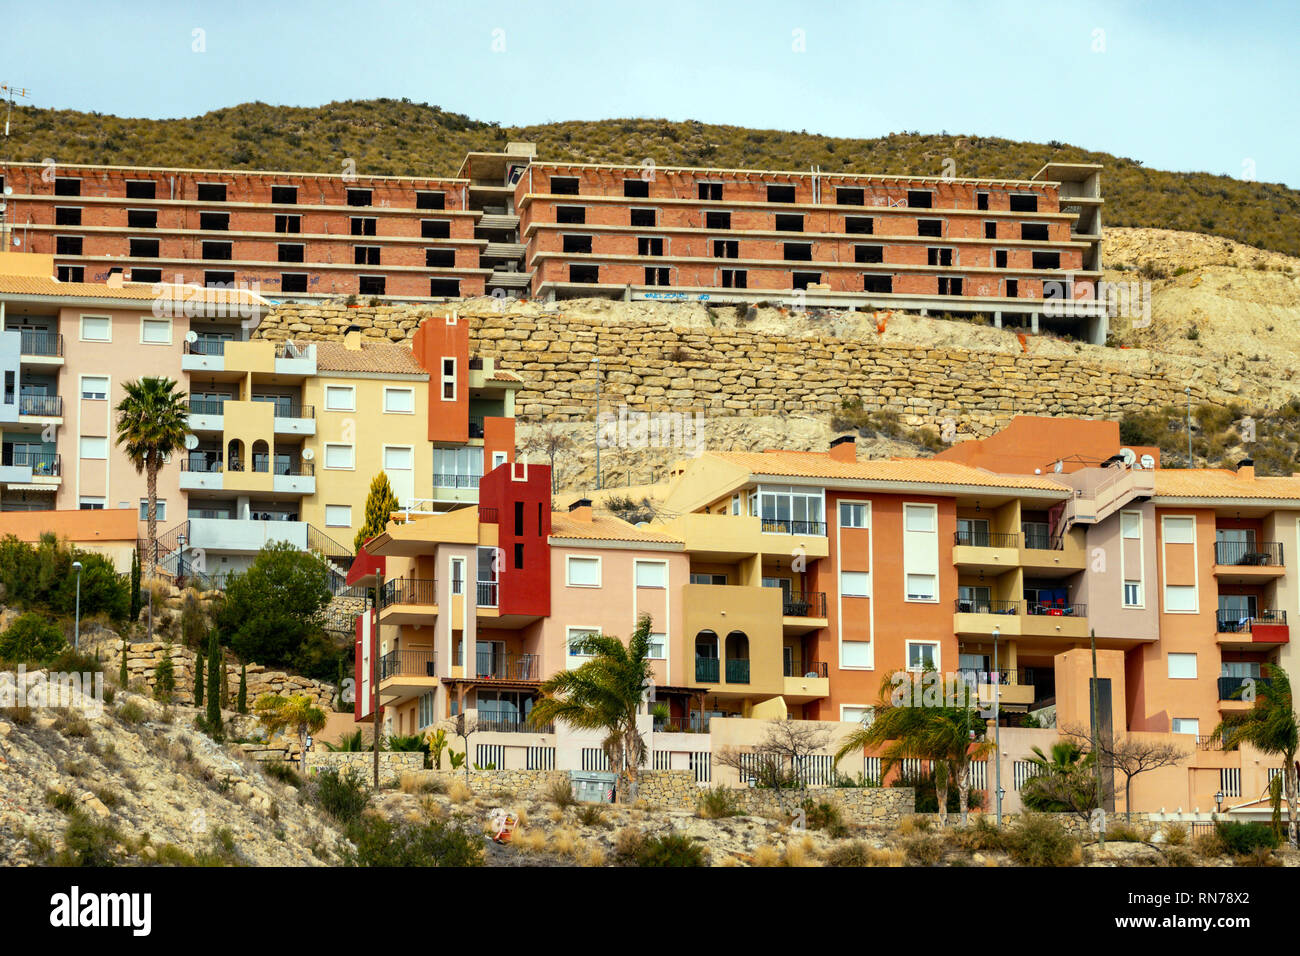 Bonalba golf resort and urbanisation, Mutxamel, Alicante, Costa Banca, Spain Stock Photo